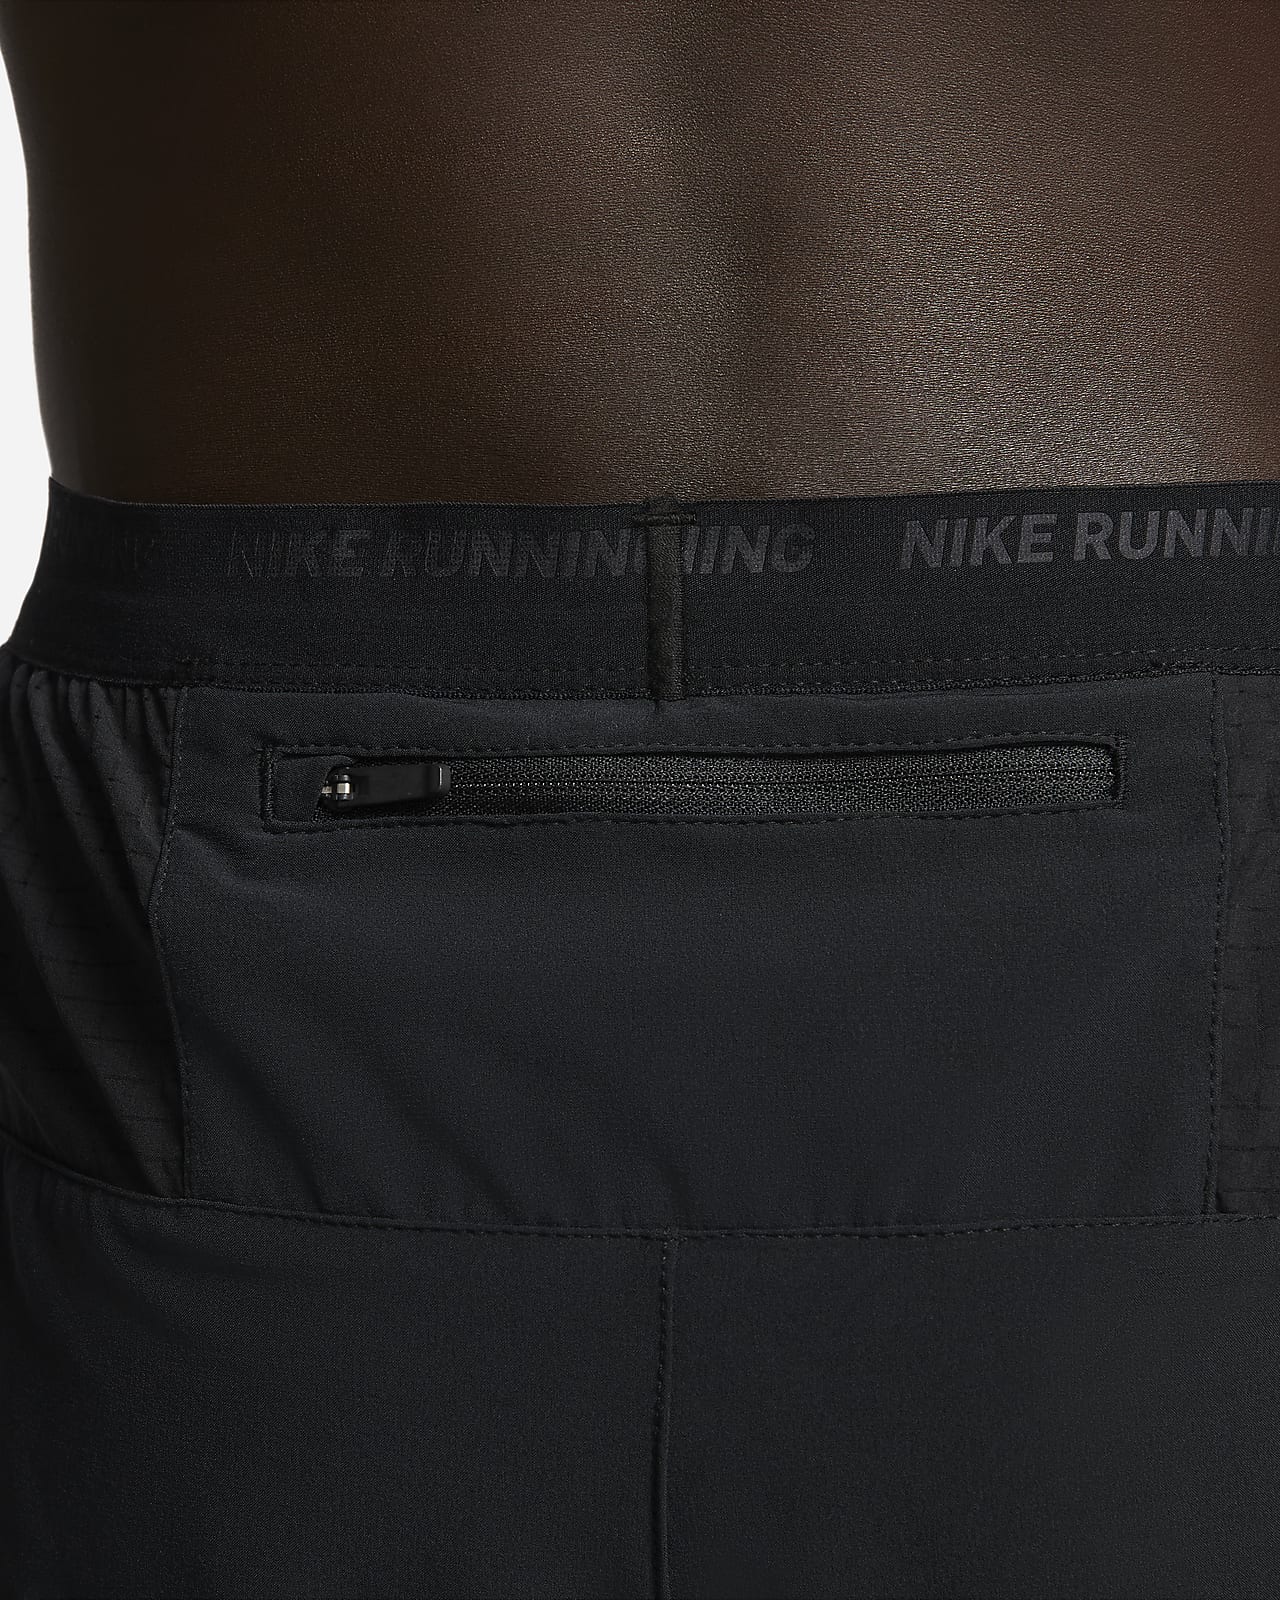 Nike PHENOM ELITE KNIT Men’s Running Trousers Pants Black CV7437 010